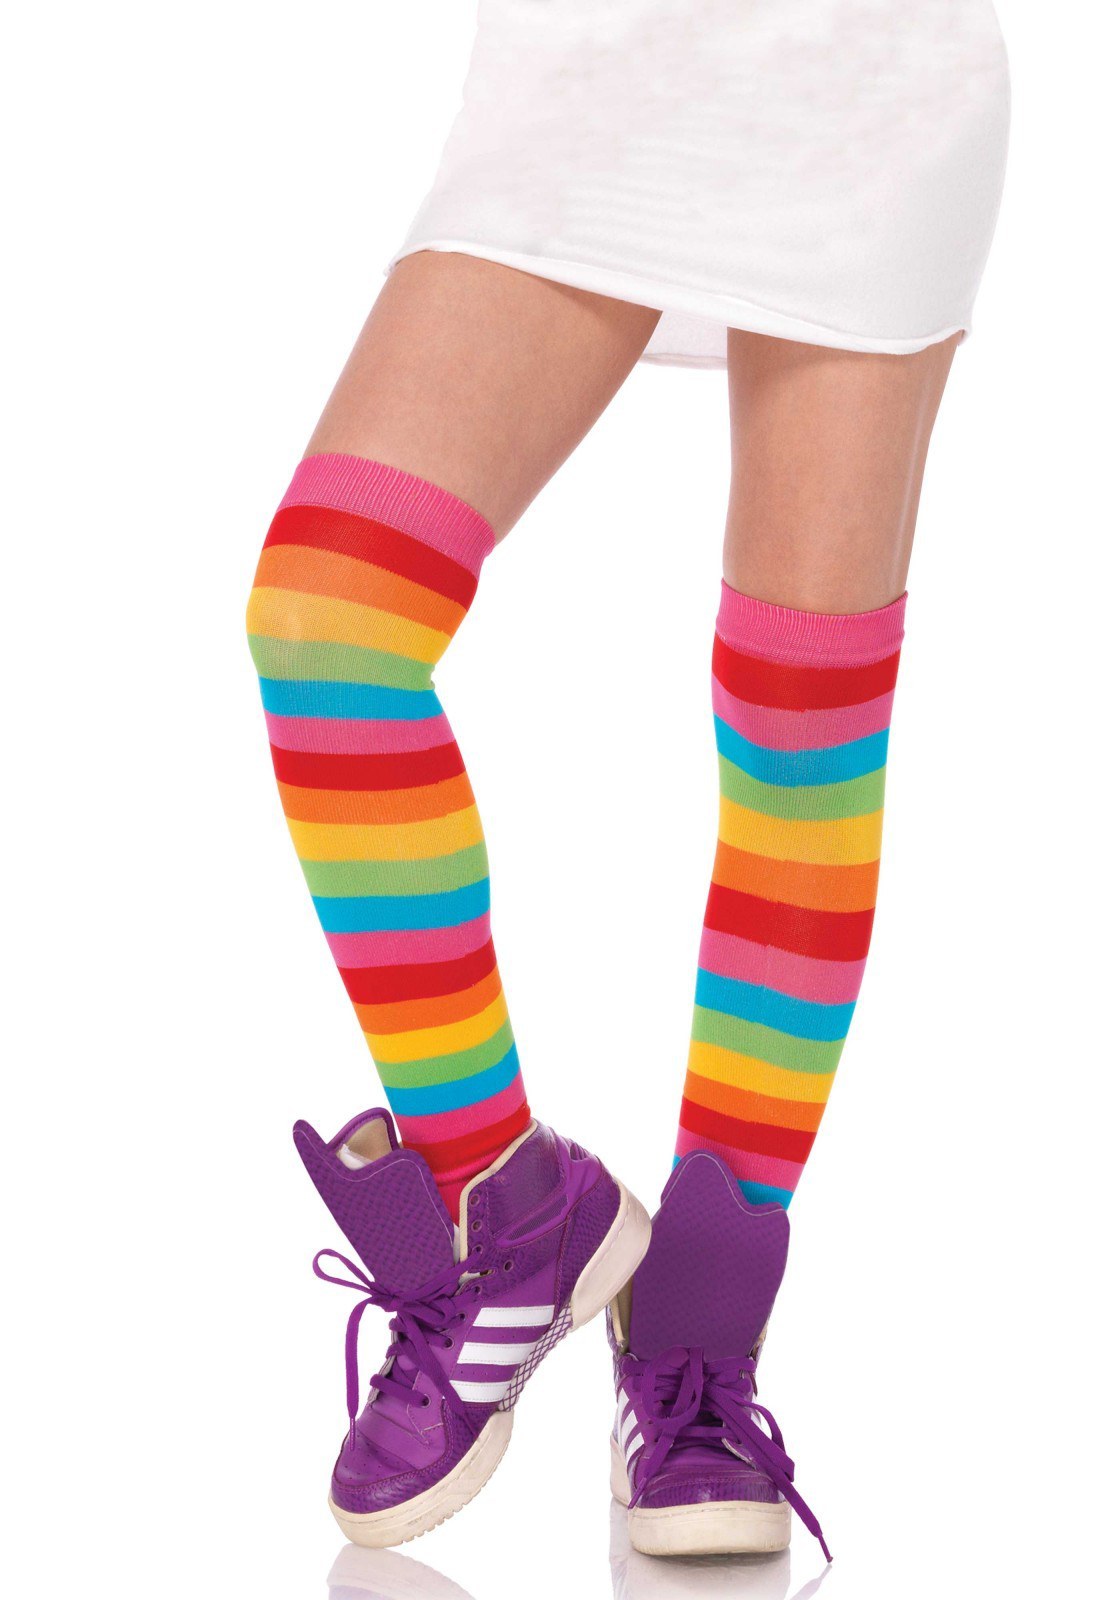 Thigh High Stockings - Rainbow